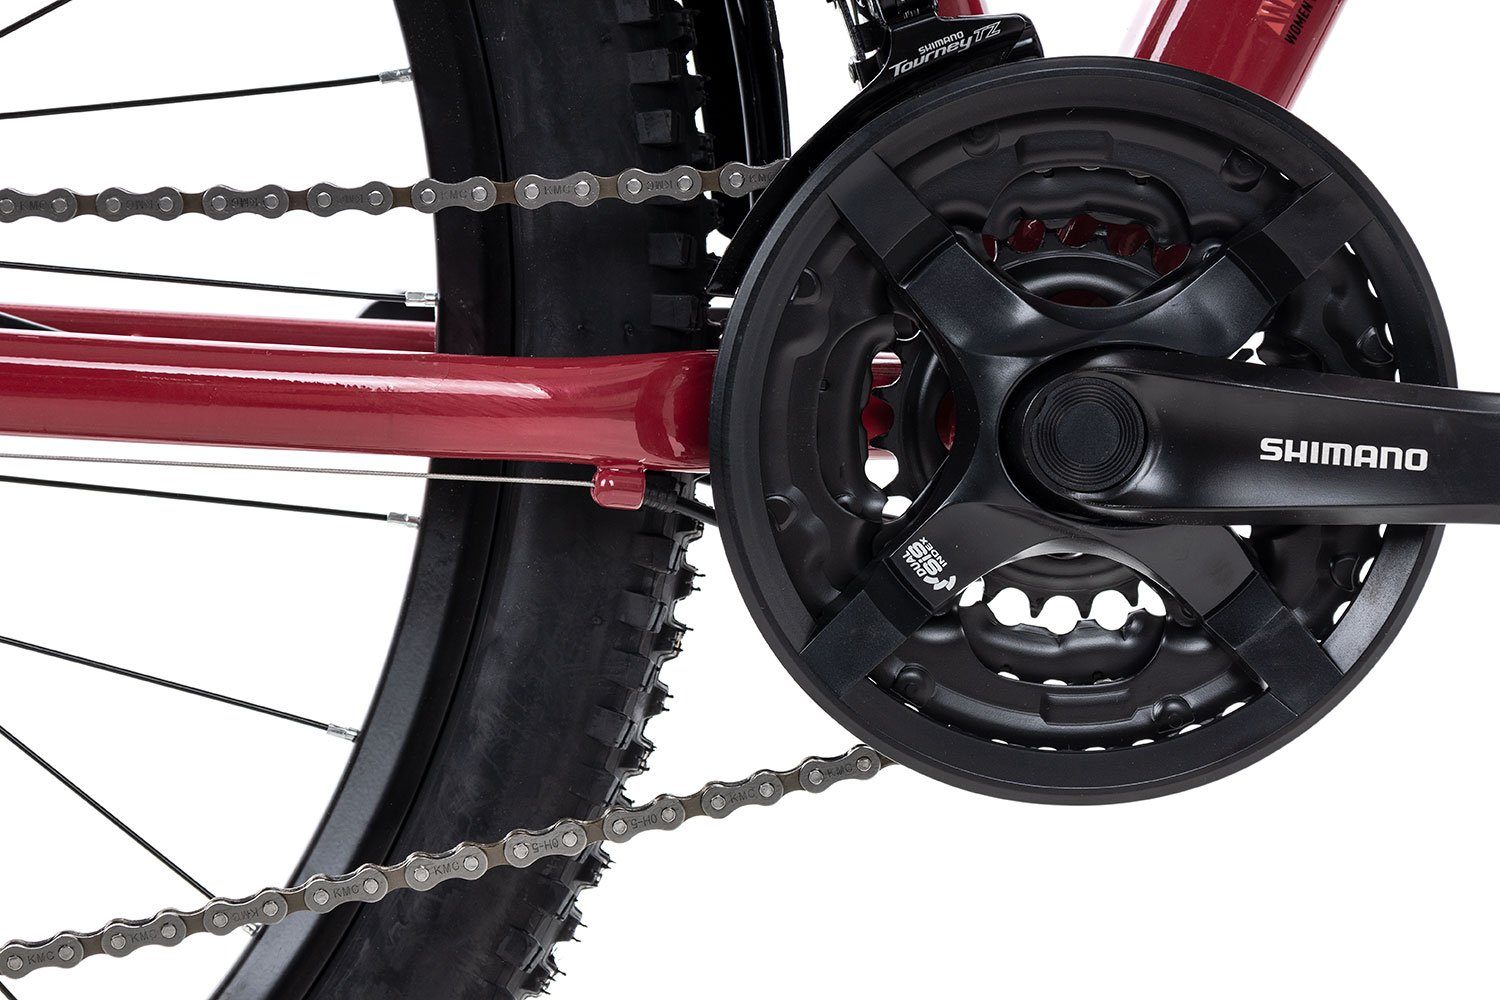 Axess Mountainbike MEEA, Schaltwerk, 21 RD-TX800 red/black/red Kettenschaltung, Gang rot/orange Tourney MTB-Hardtail Shimano